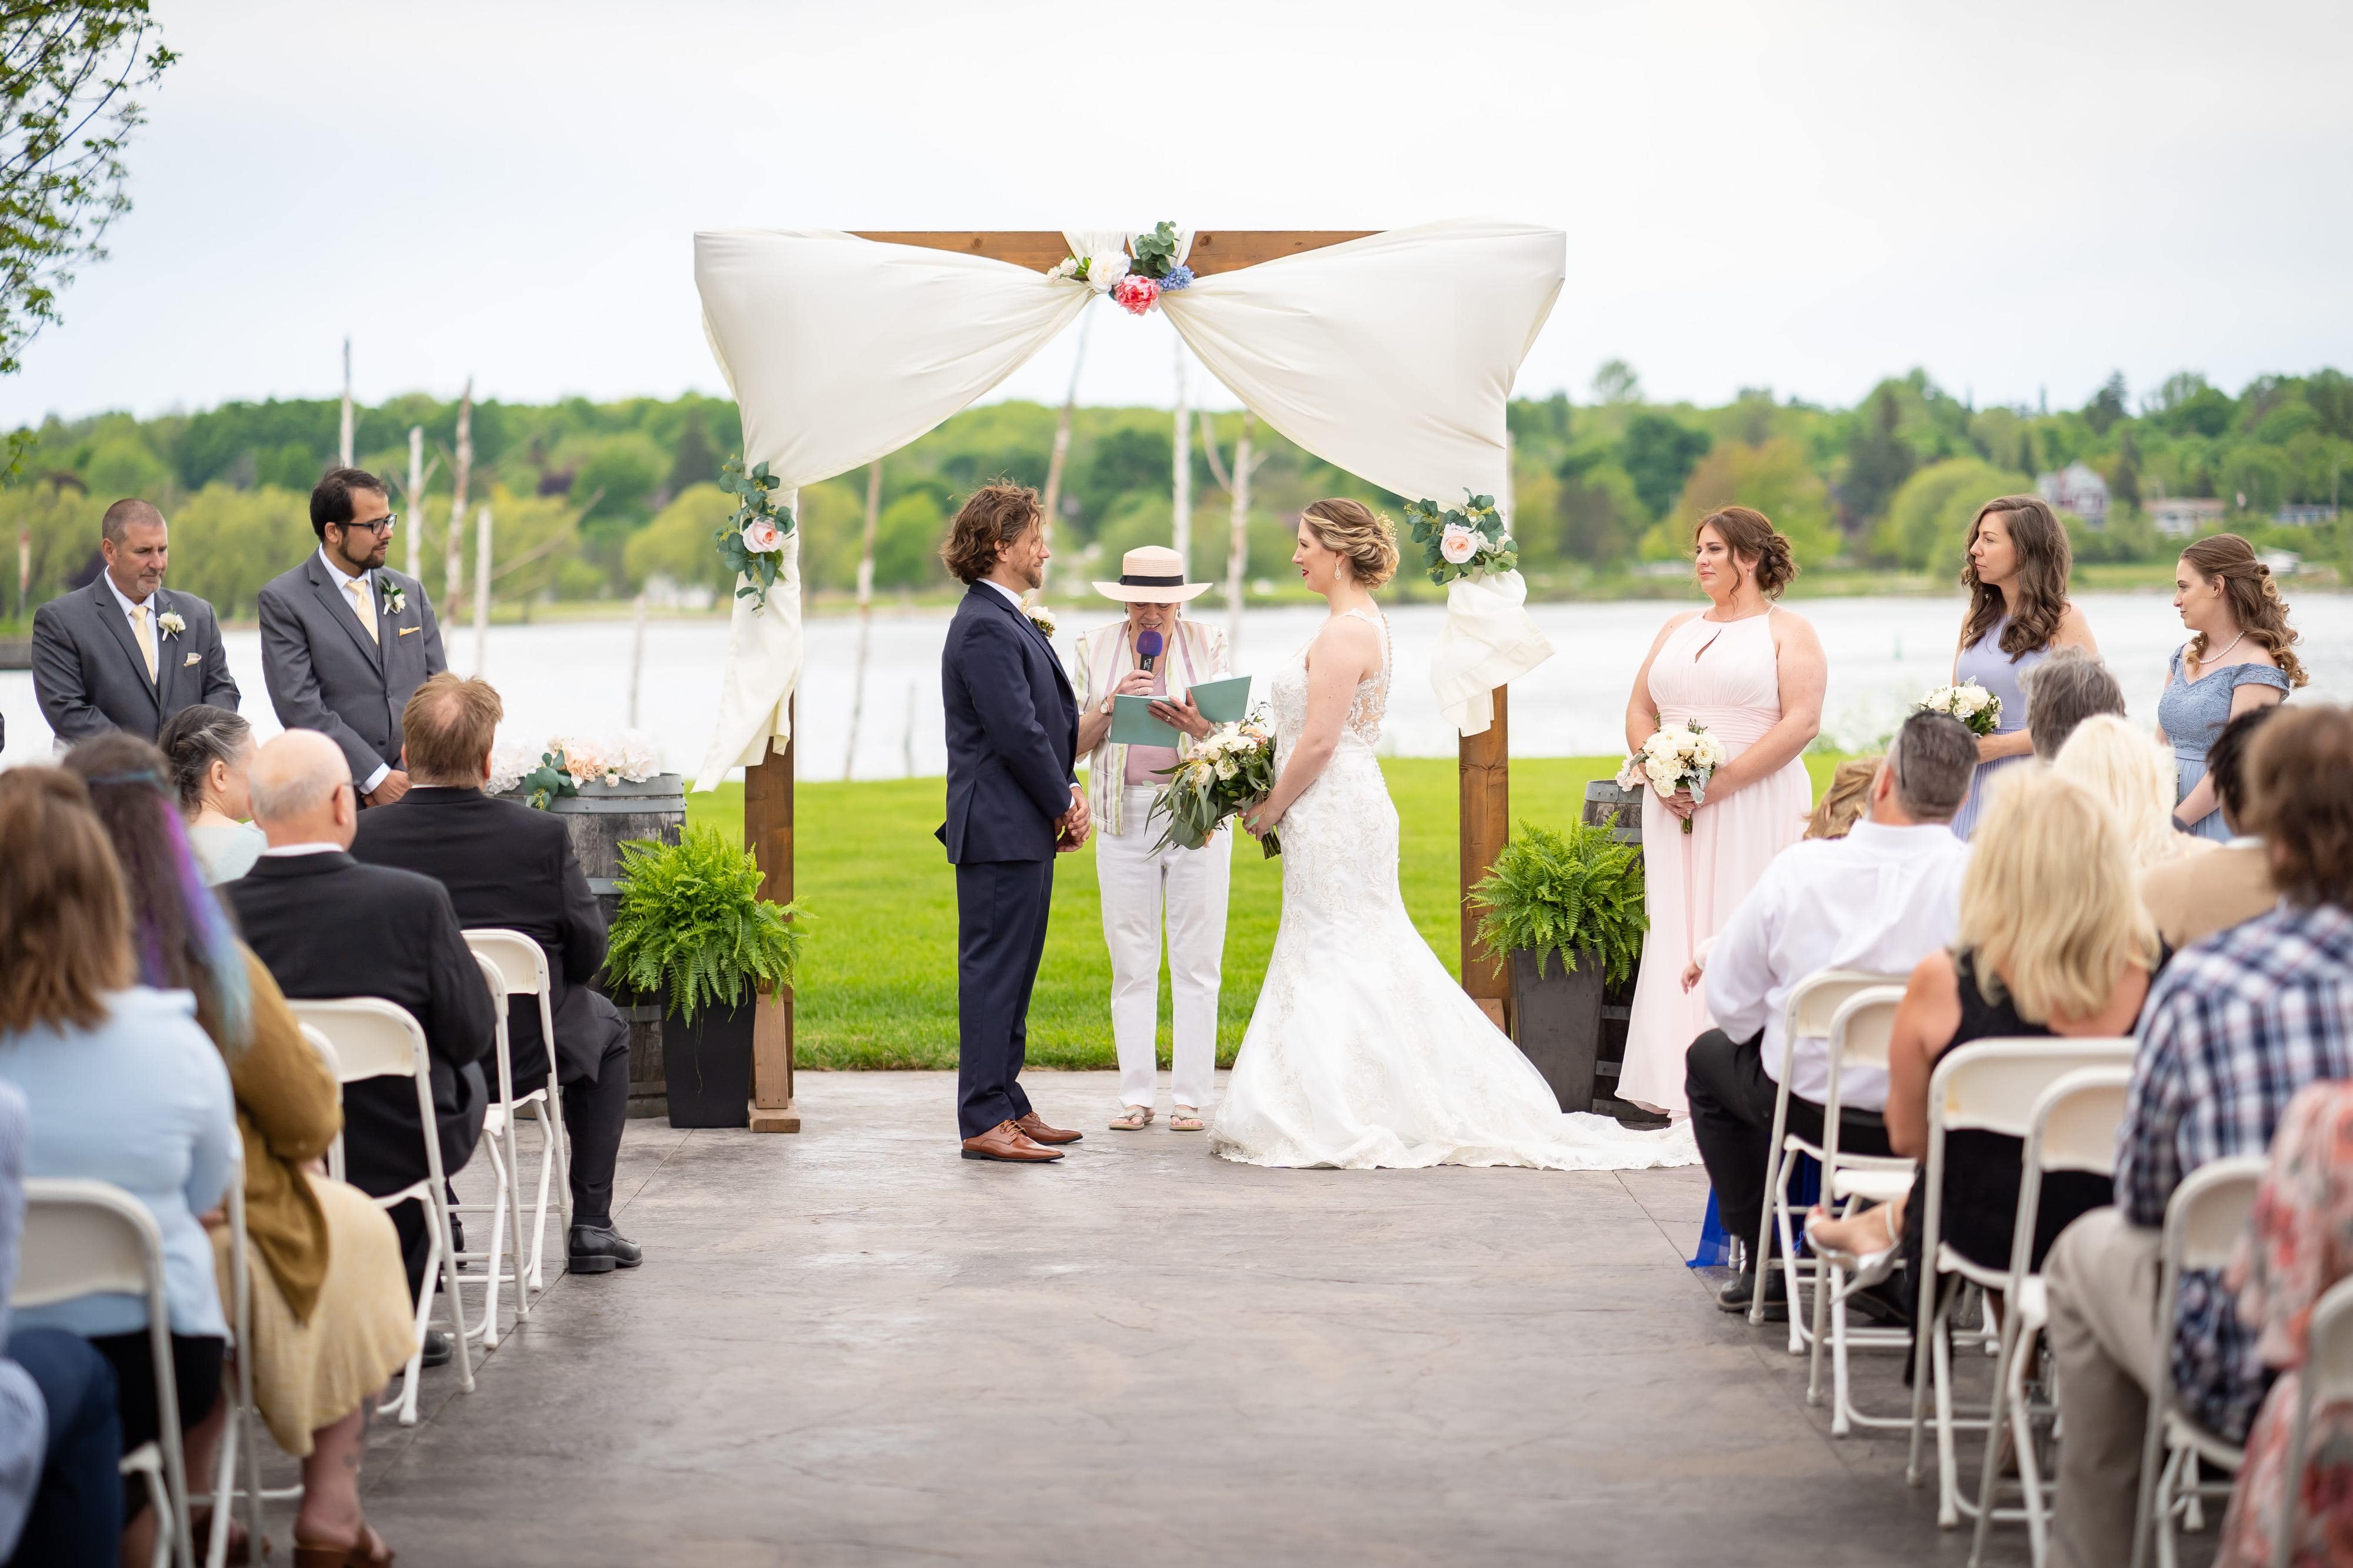 Weddings on the Bay, Owen Sound, Best Western, Destination Weddings in Ontario Canada